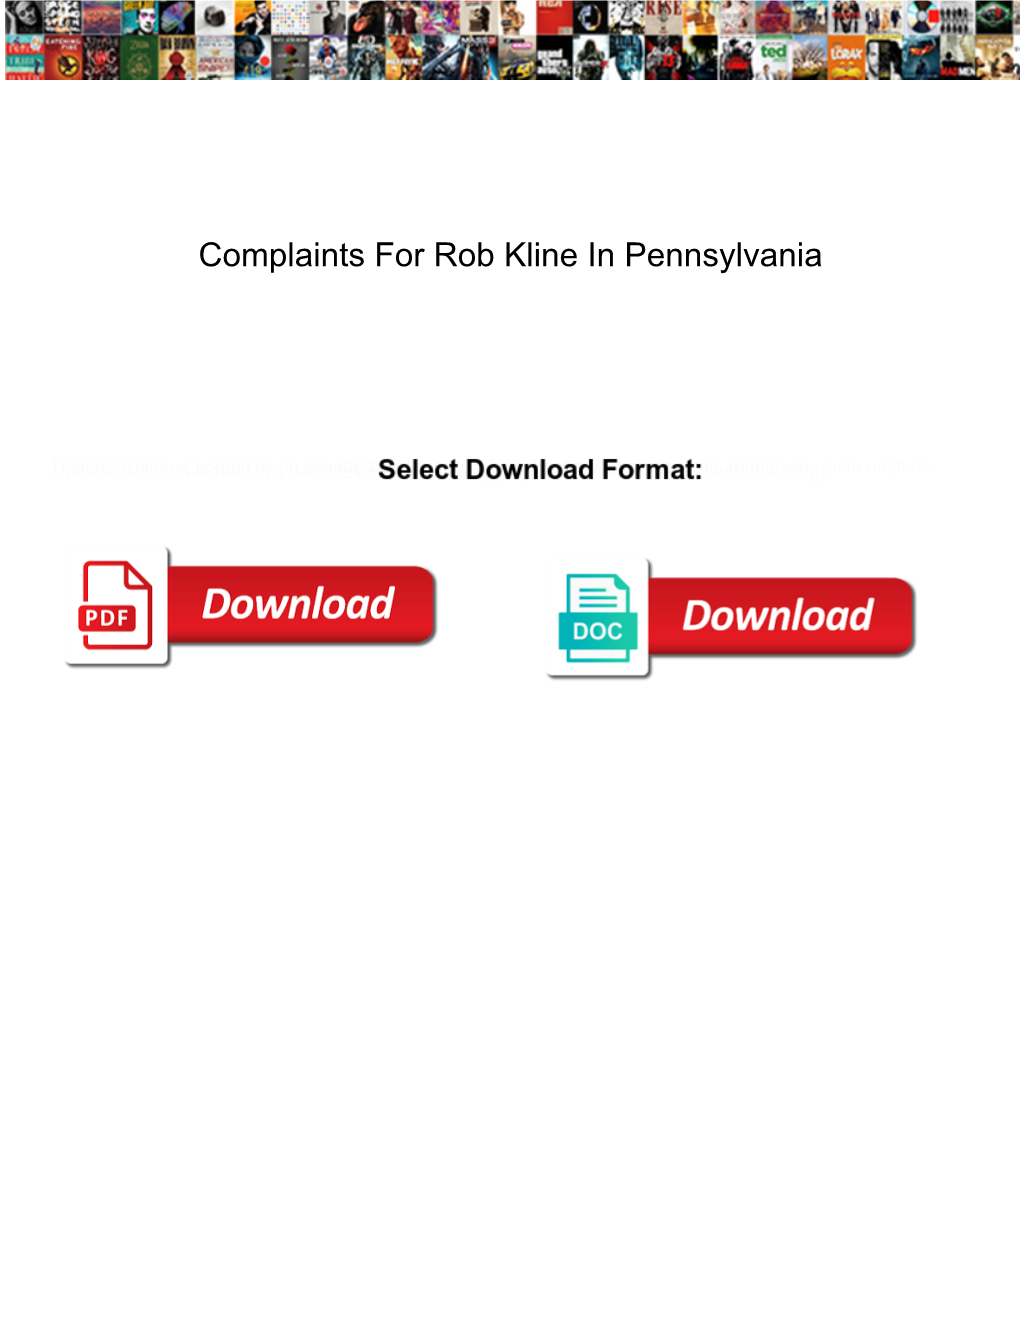 Complaints for Rob Kline in Pennsylvania